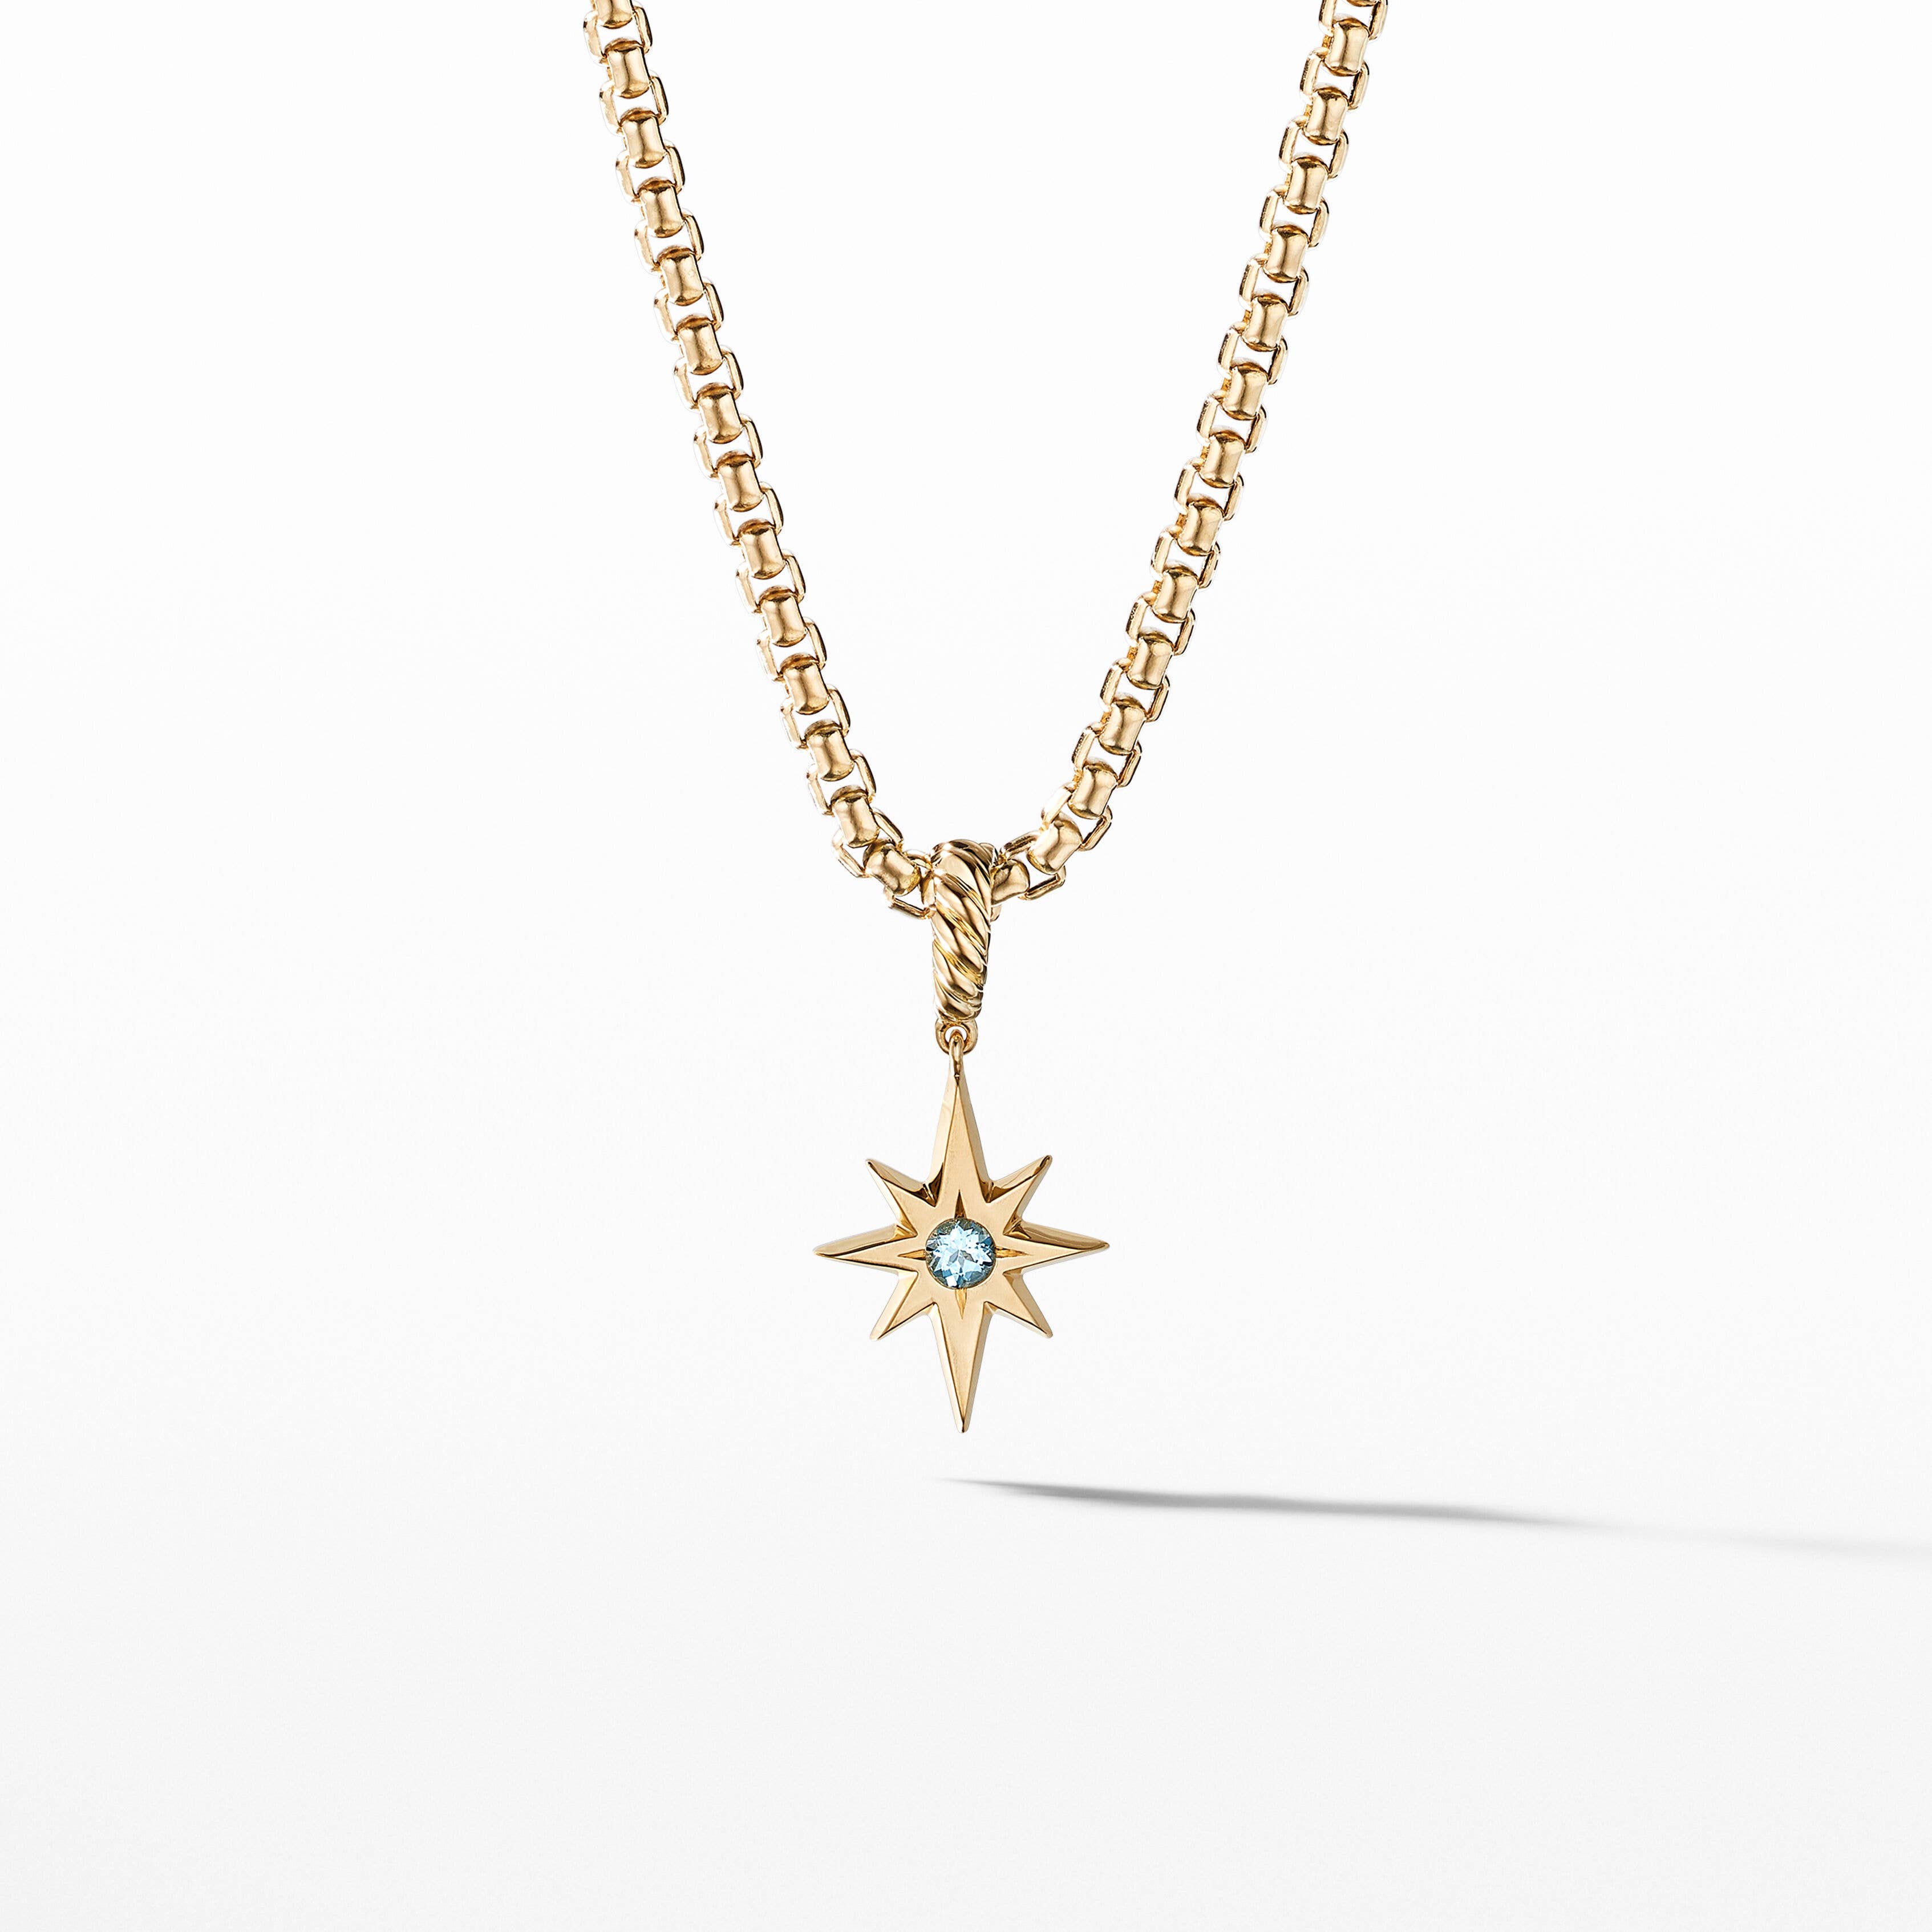 North Star Birthstone Amulet in 18K Yellow Gold with Aquamarine